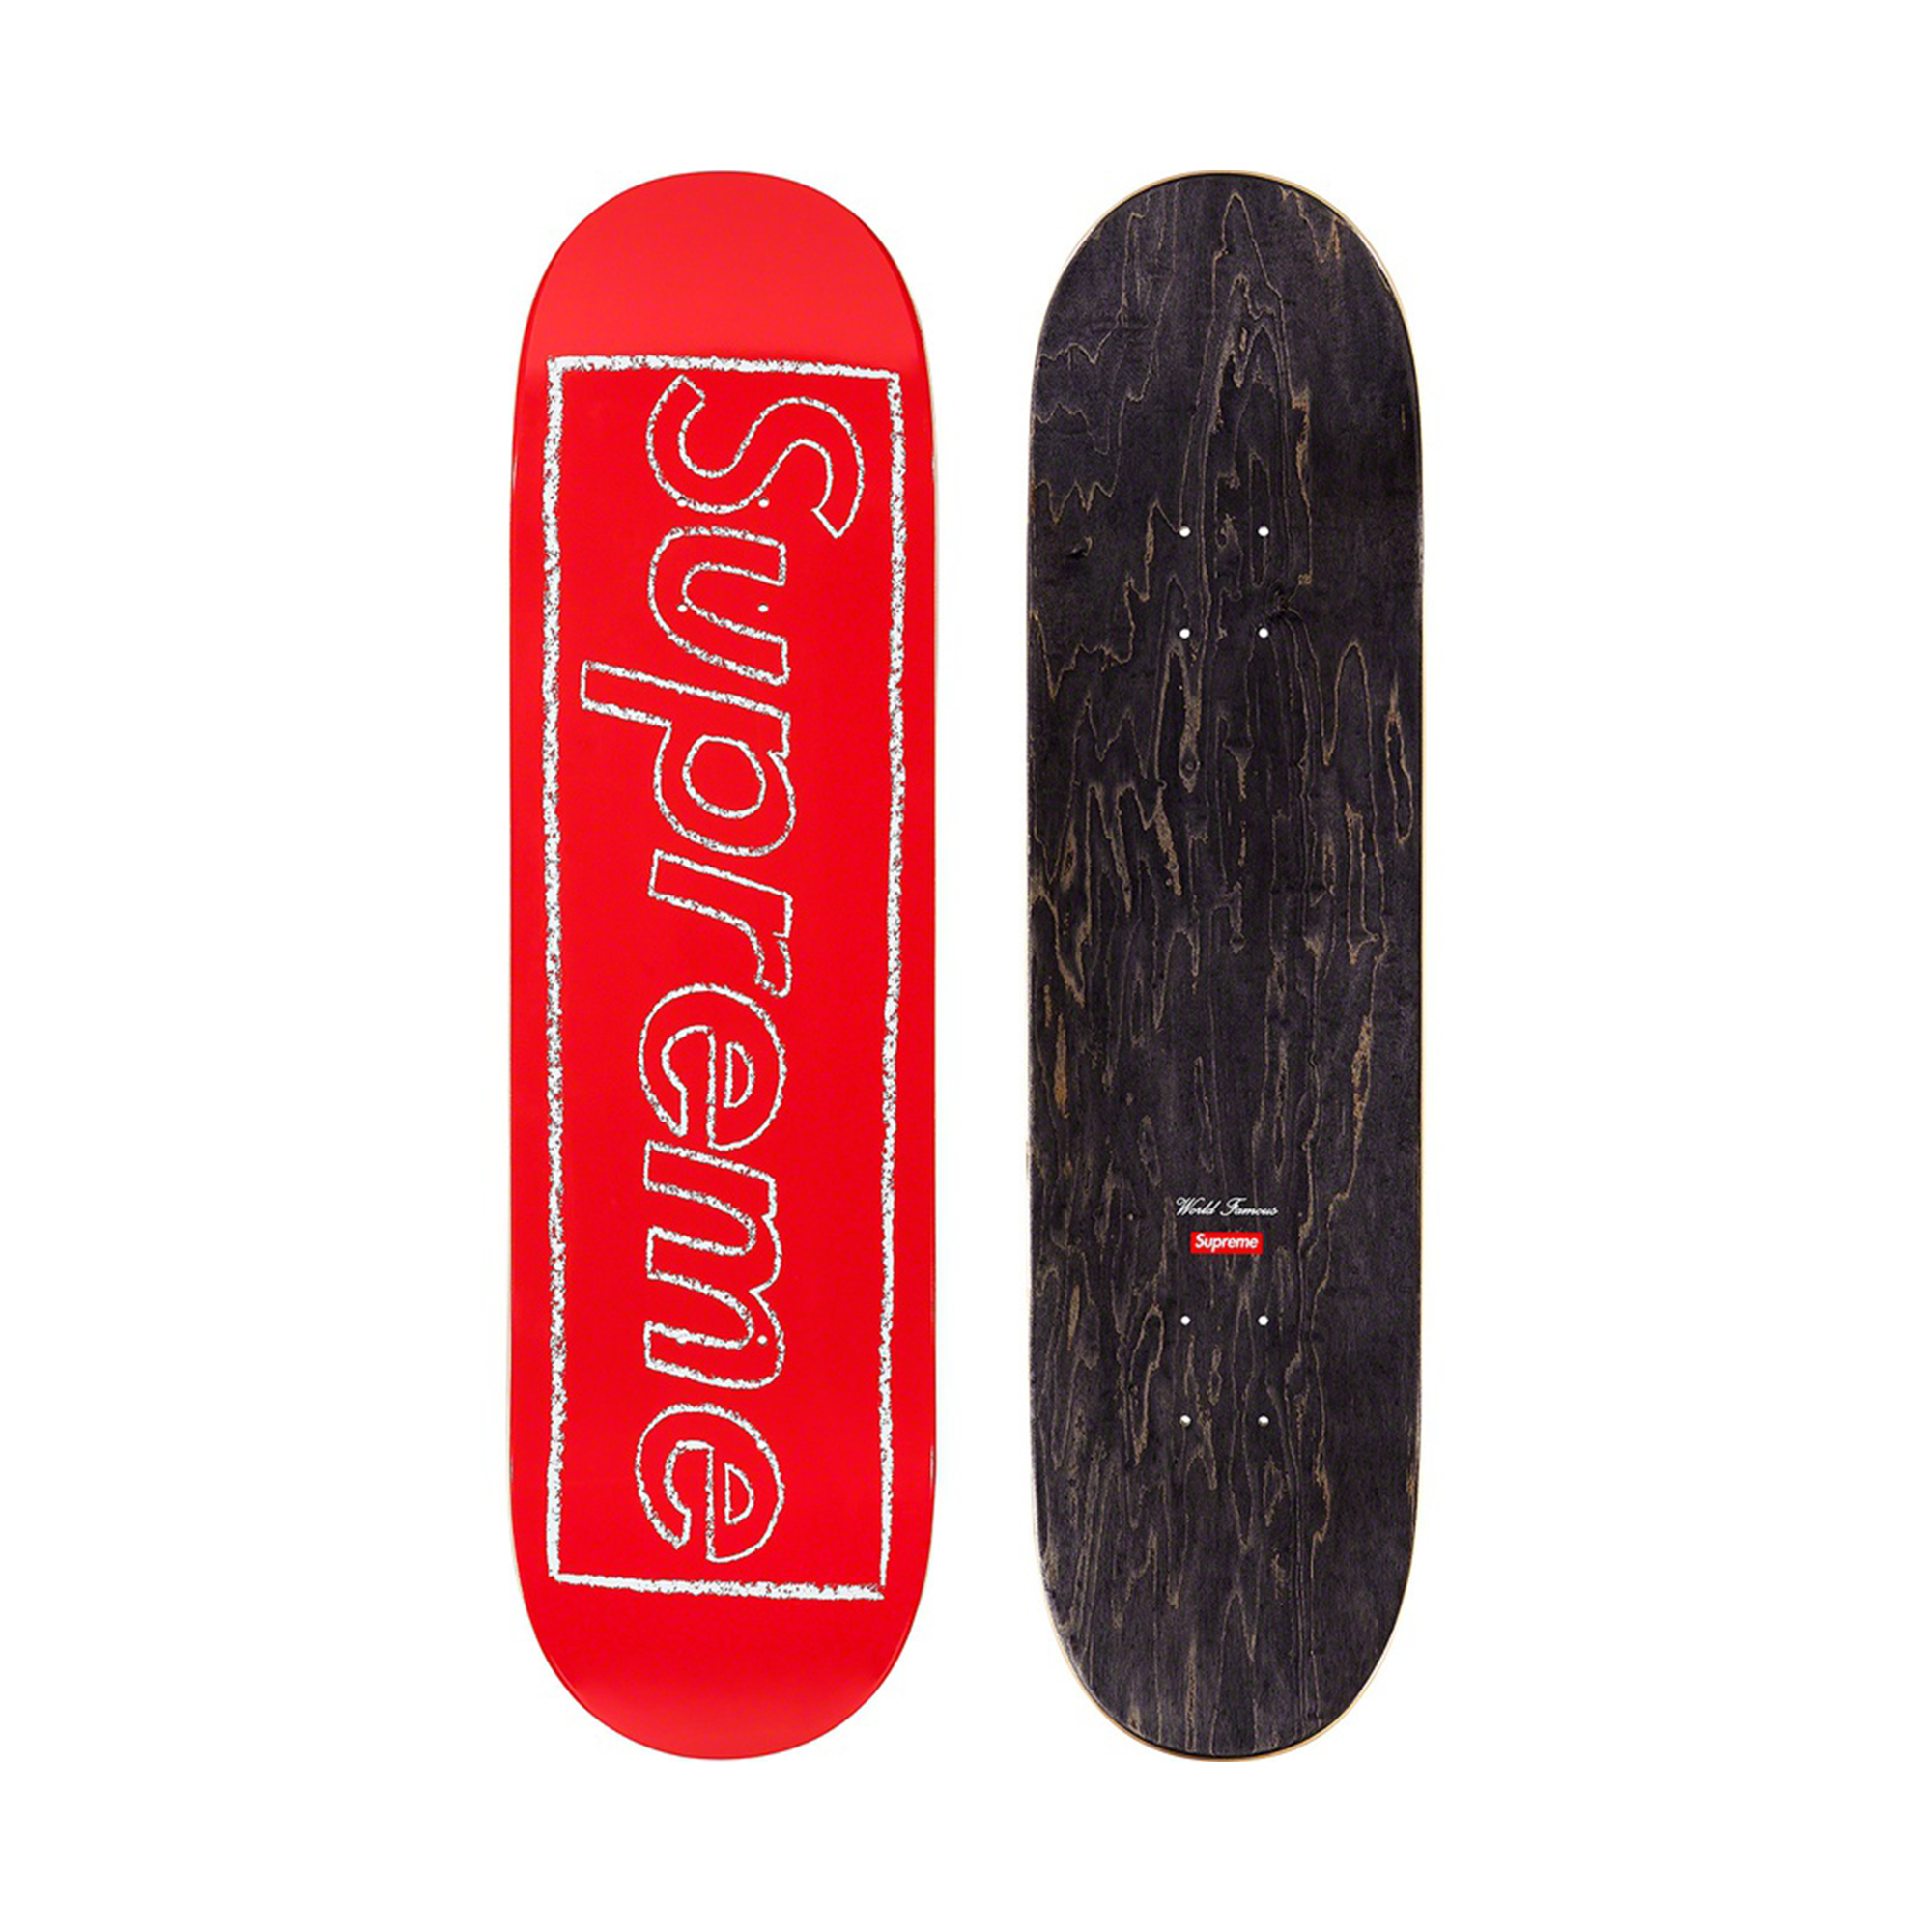 156: KAWS X SUPREME, Box Logo skateboard decks (Red, White and